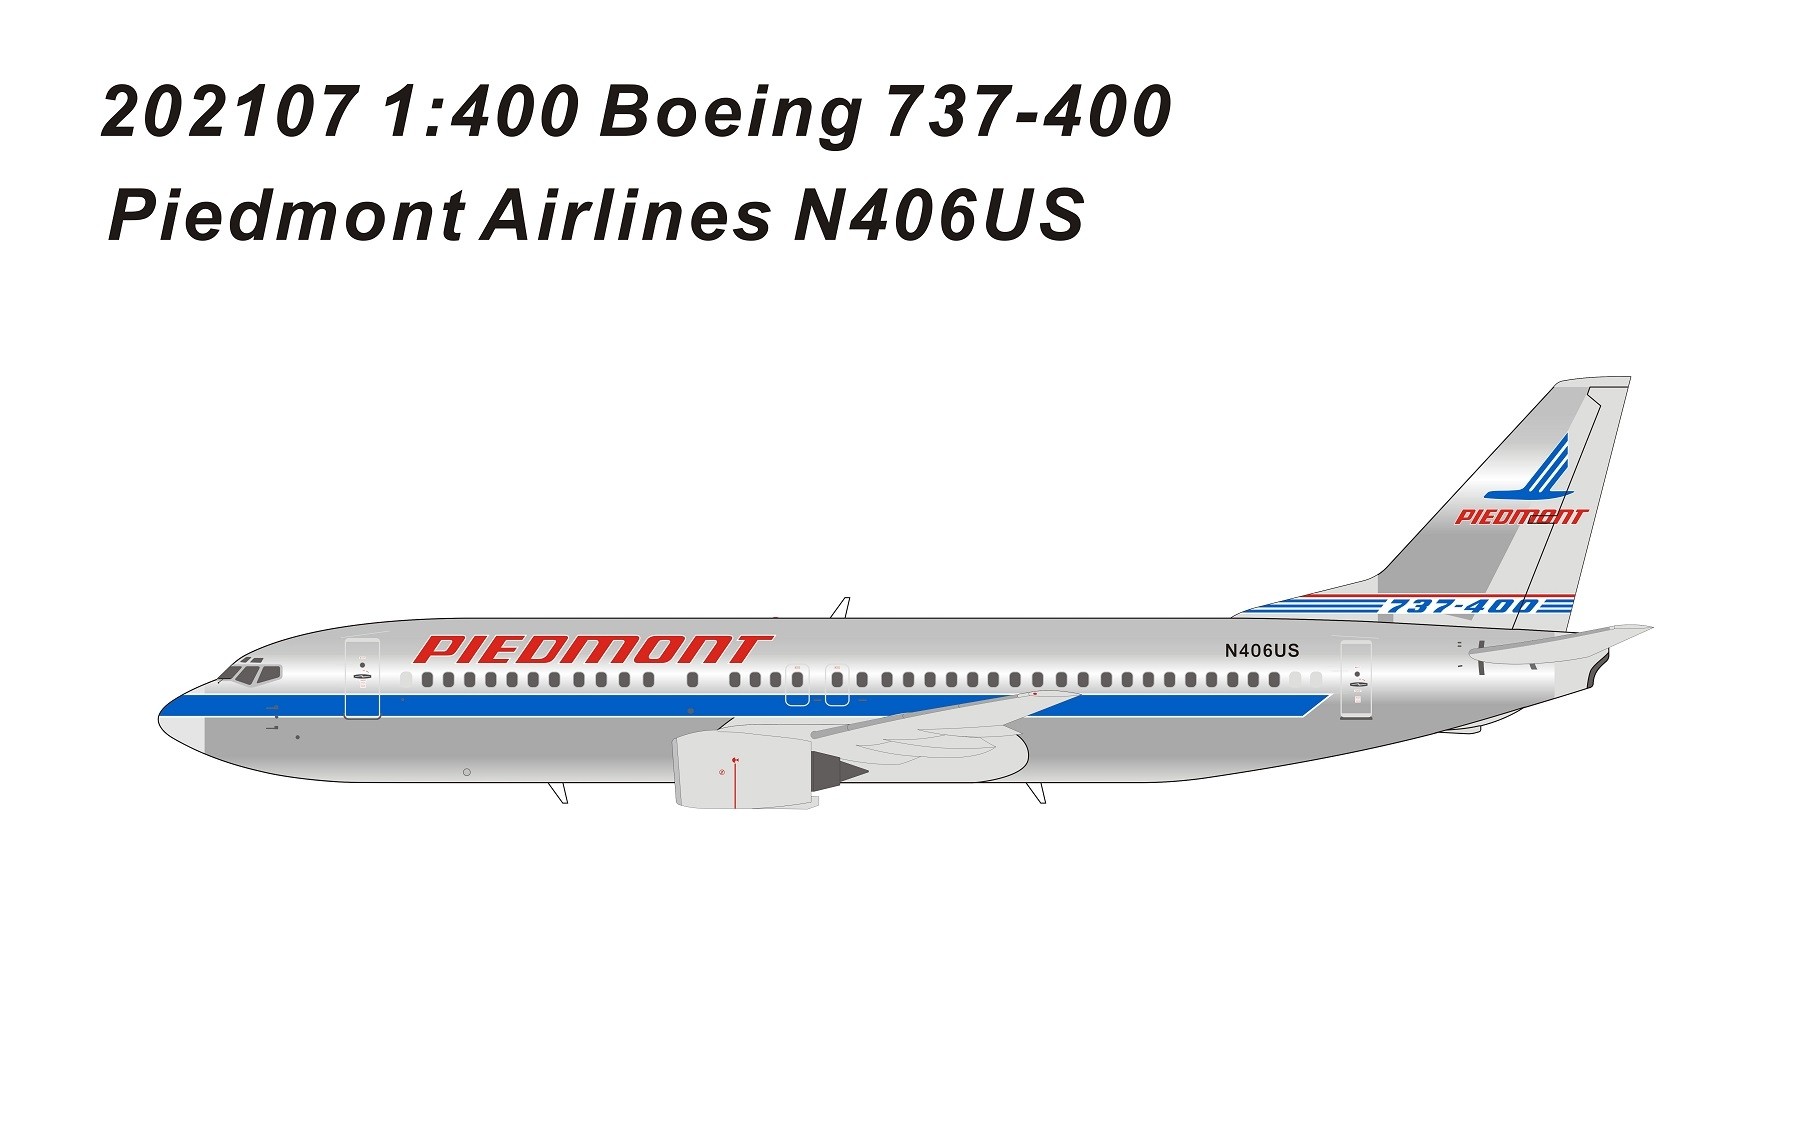 Details about   PM202028 Panda Models 737-600 1/400 Model N7376 Boeing